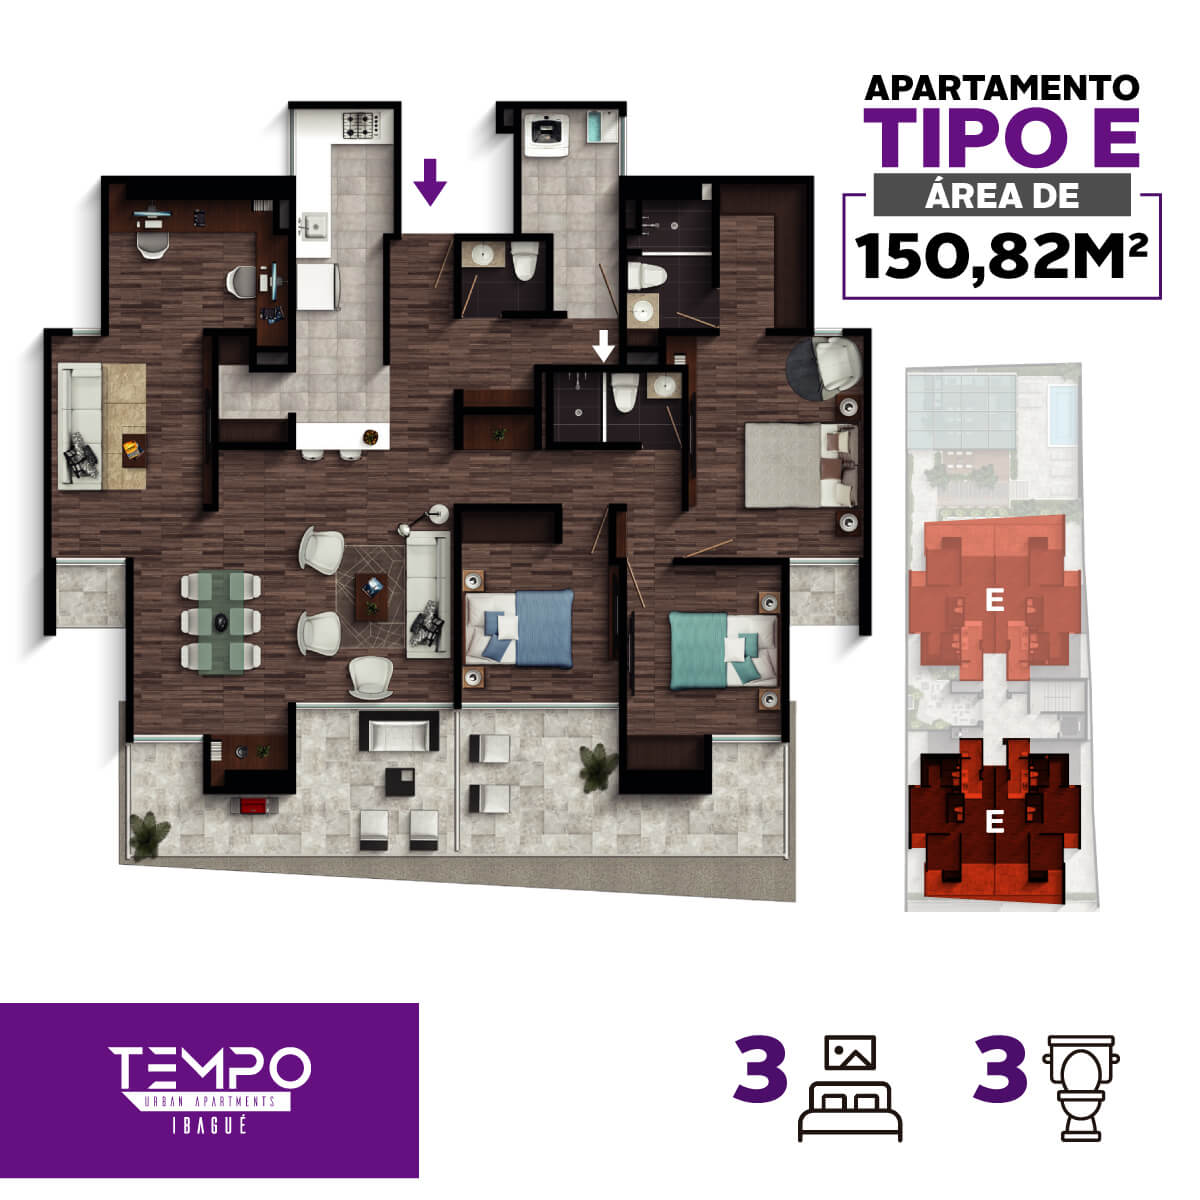 Tempo-urban-apartments-apartamento-tipo-E